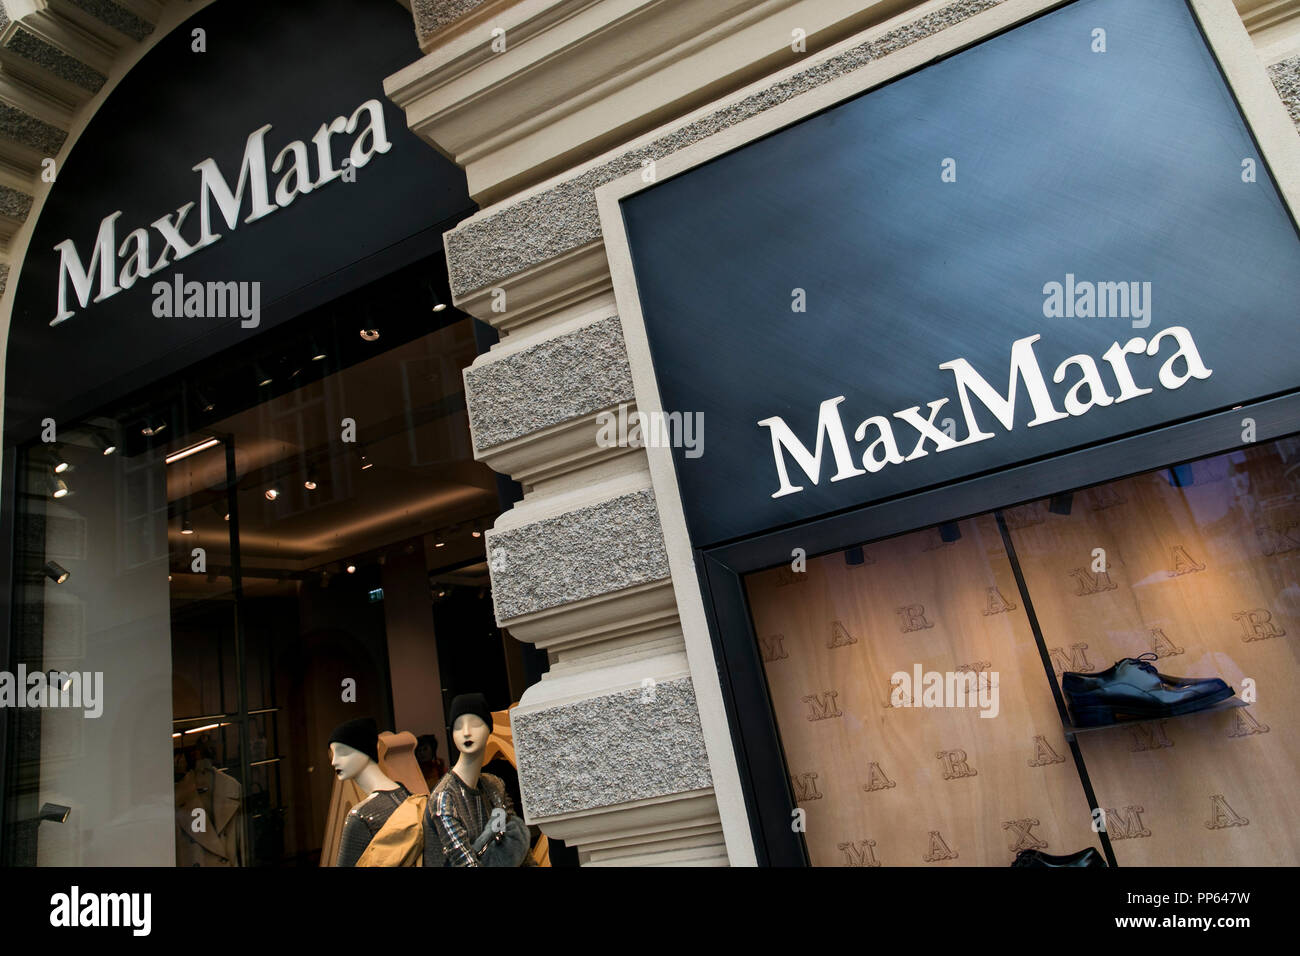 Max mara logo hi-res stock photography and images - Alamy